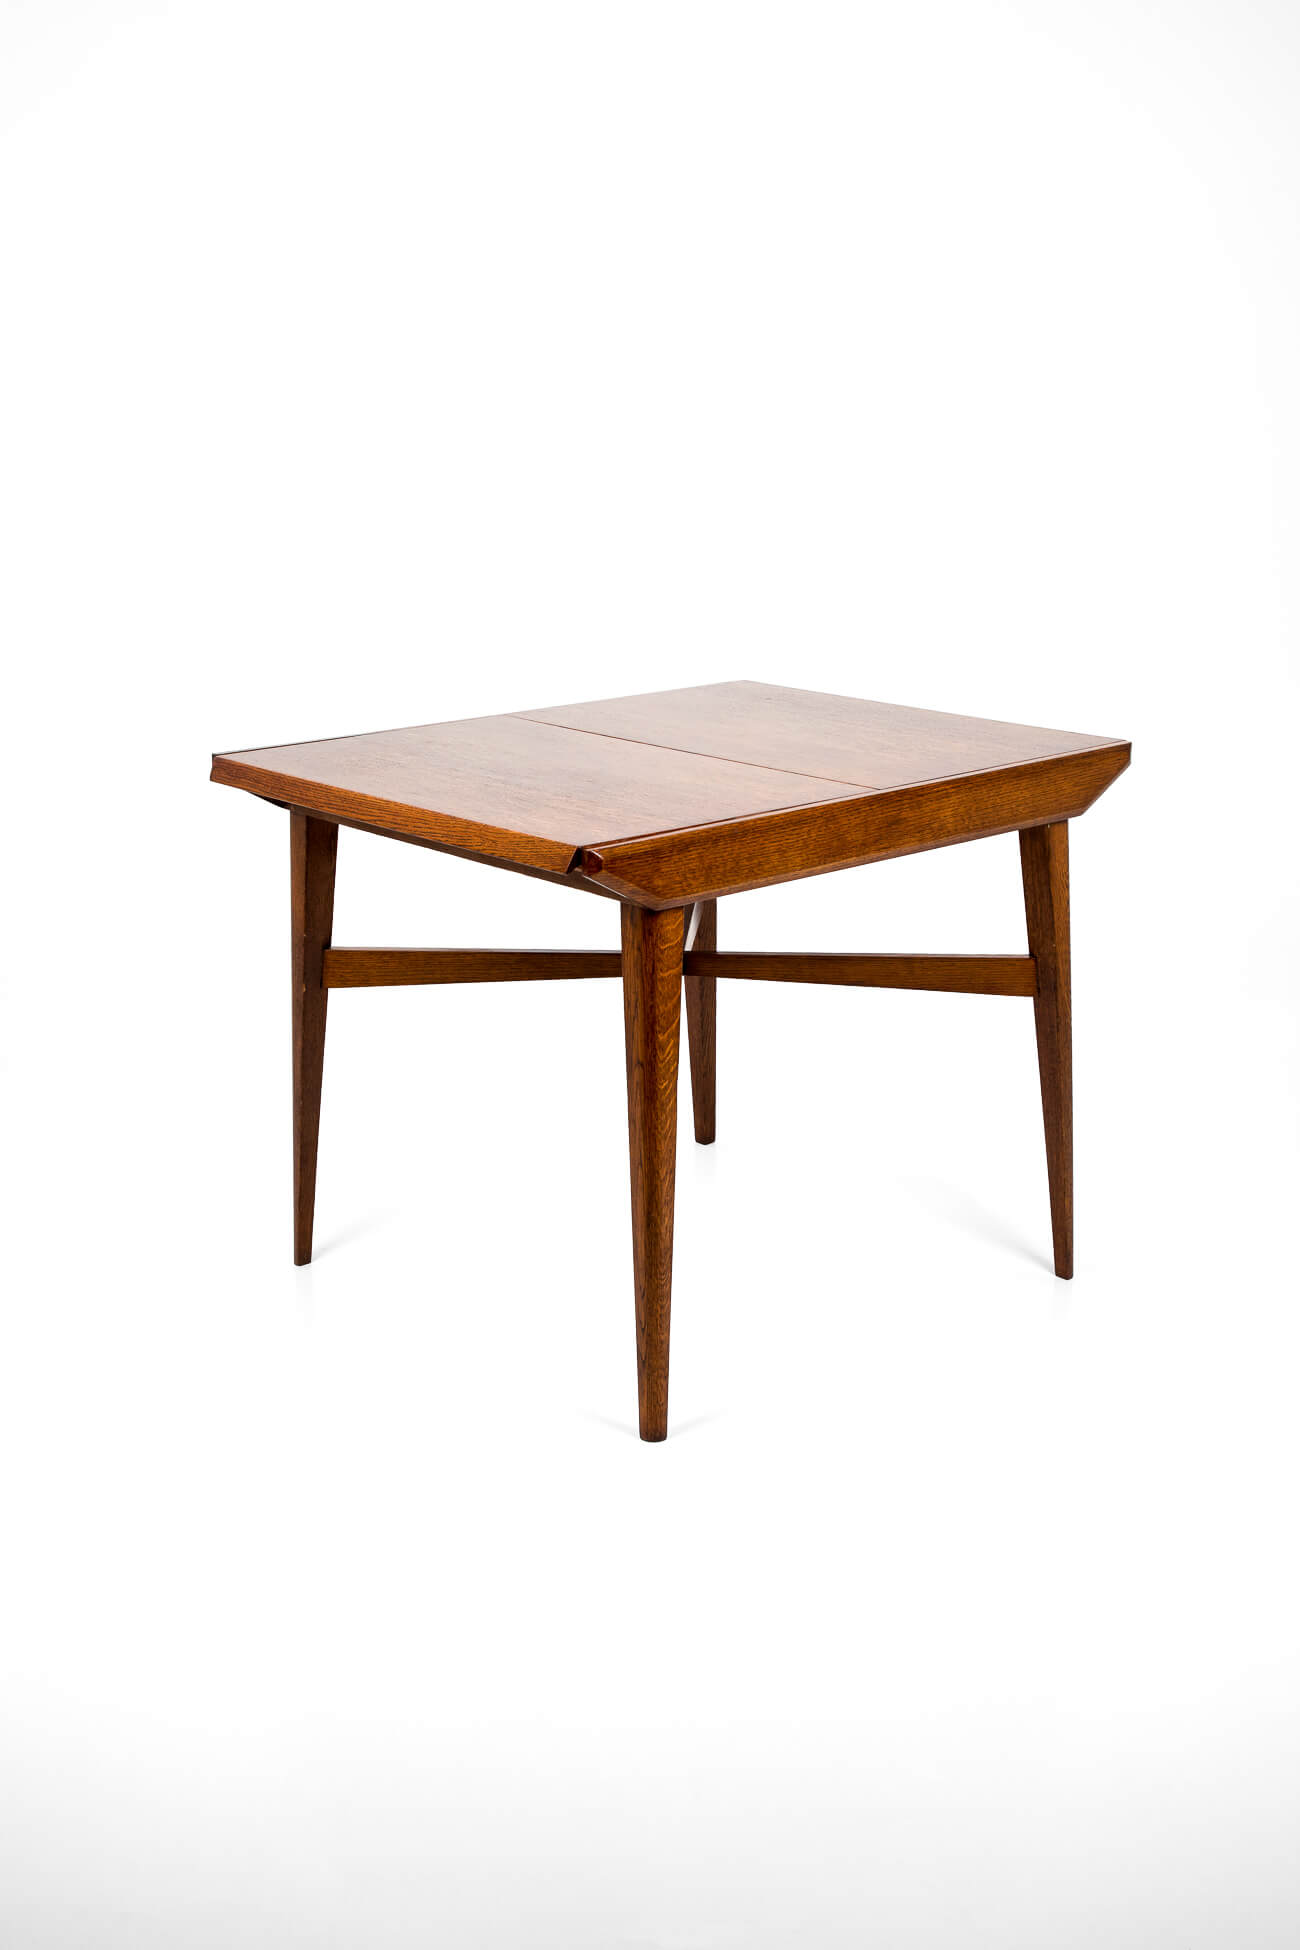 Harris Lebus 1950s Oak Extendable Dining Table